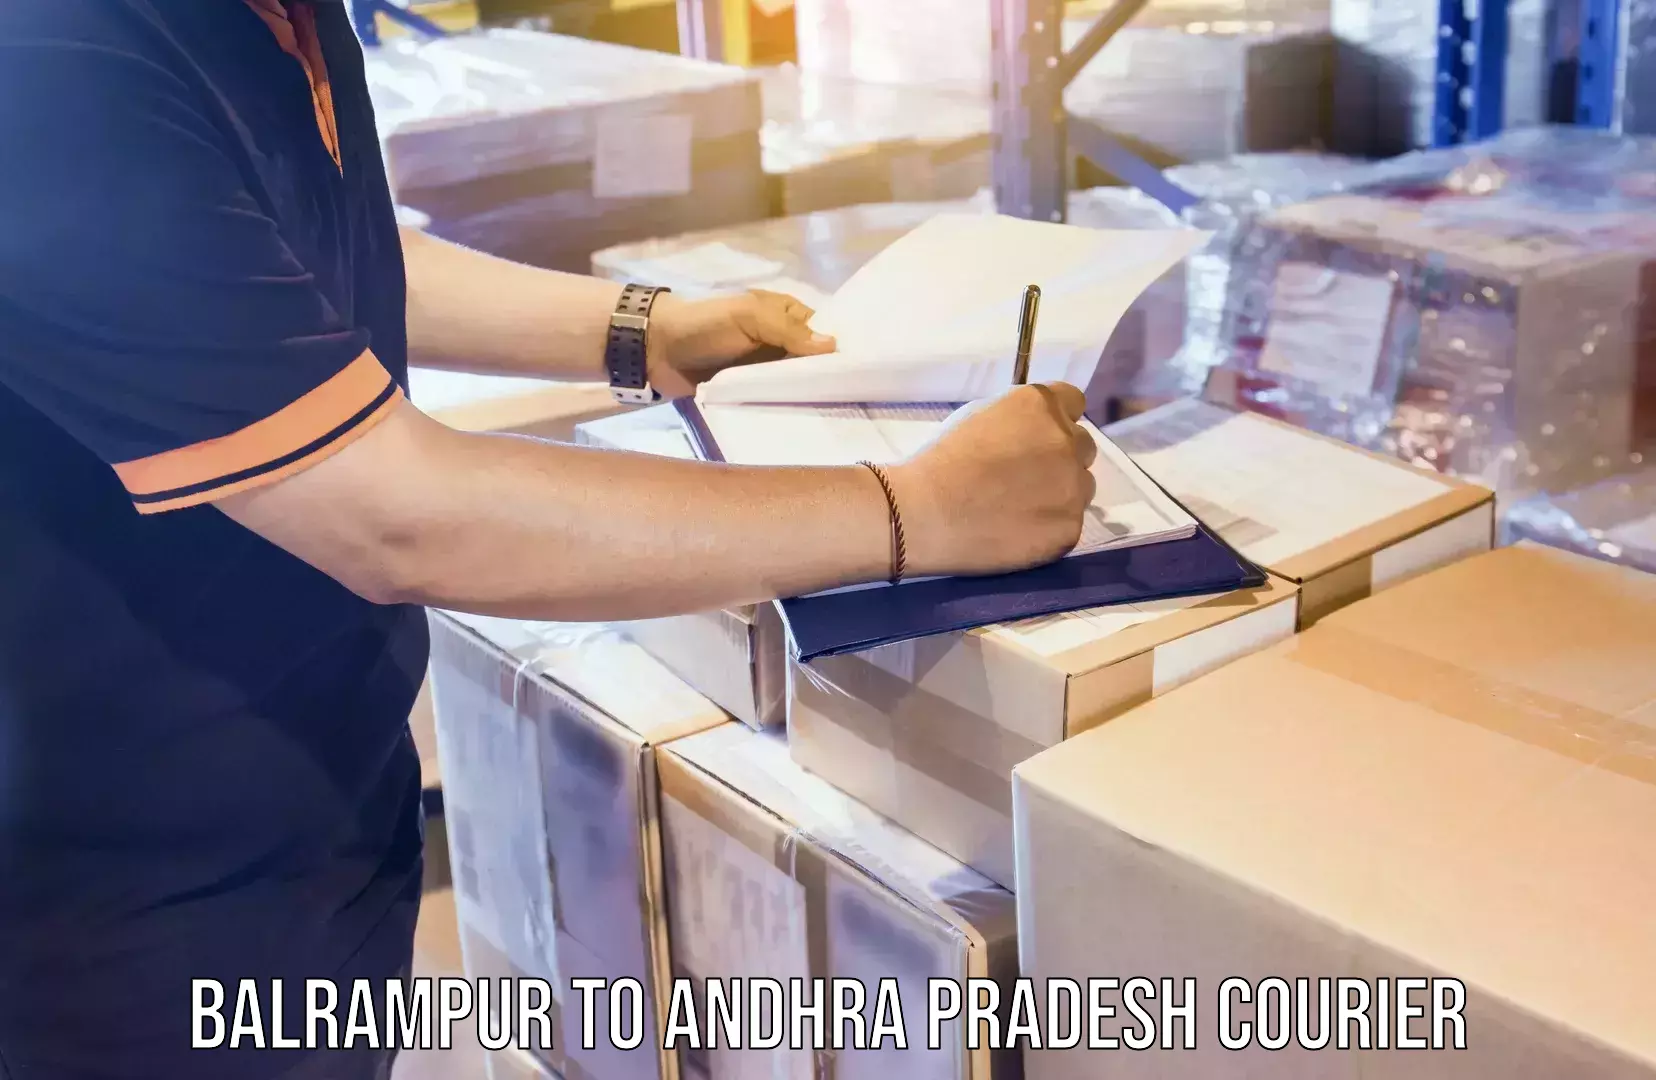 Courier service innovation Balrampur to Andhra Pradesh